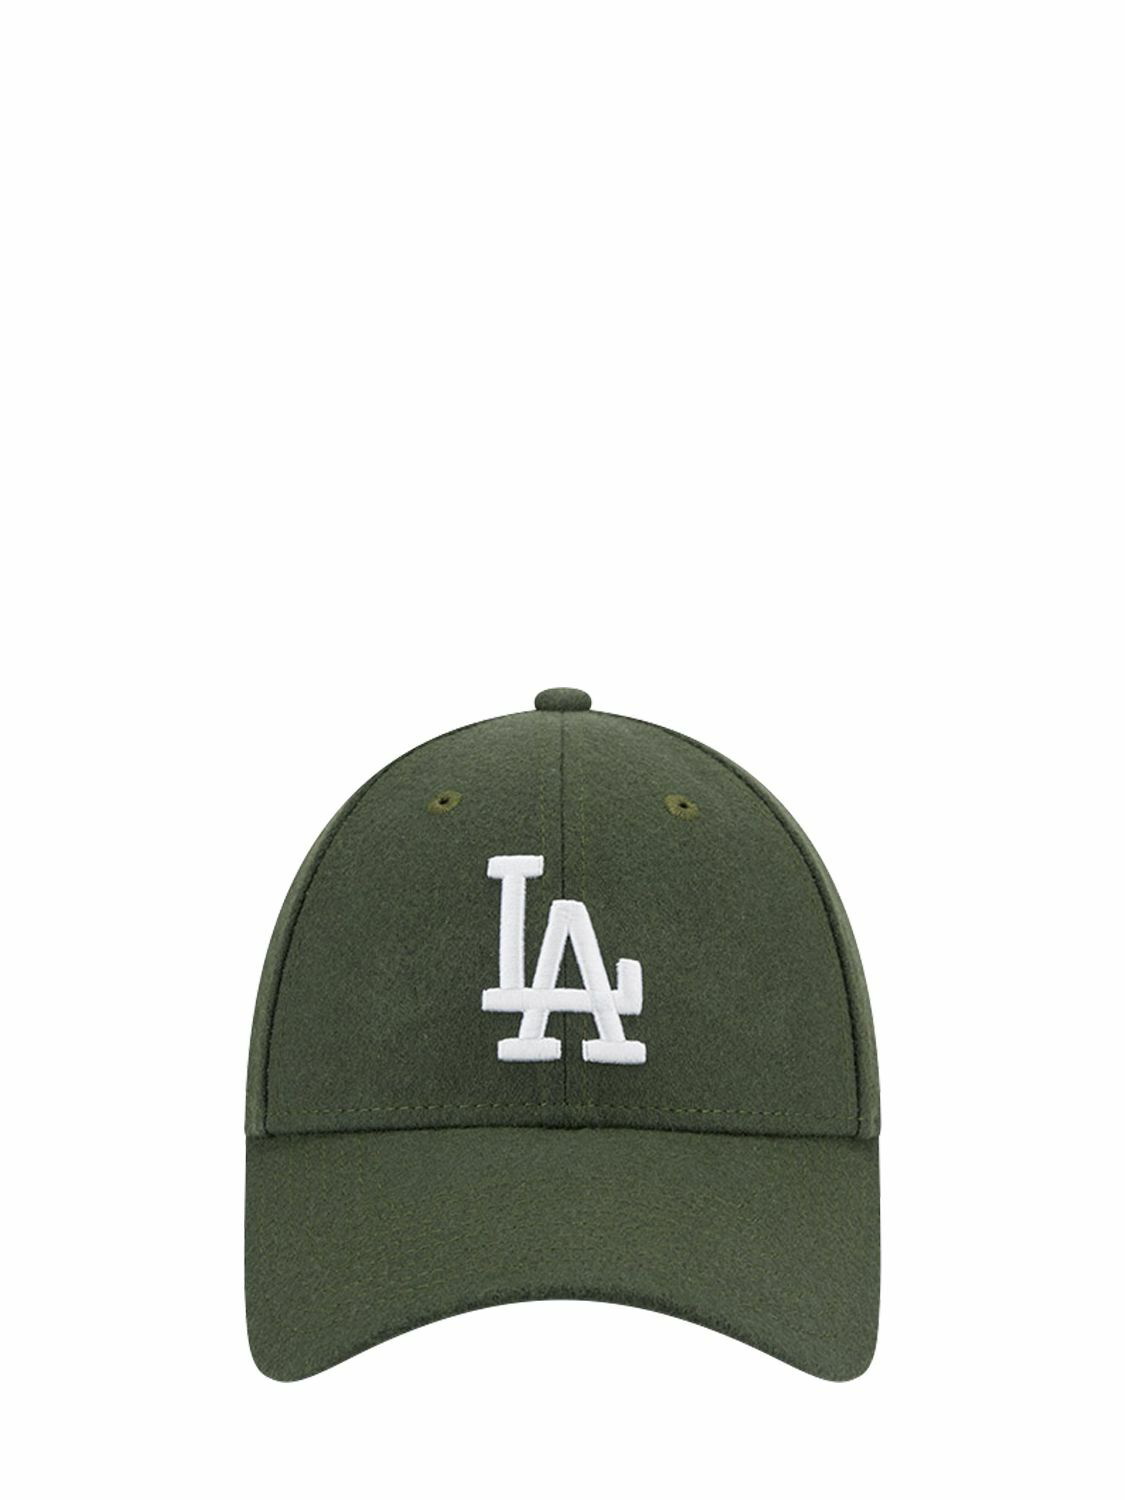 2018 New Baseball Caps LA Dodgers Embroidery Hats for Men Women NY